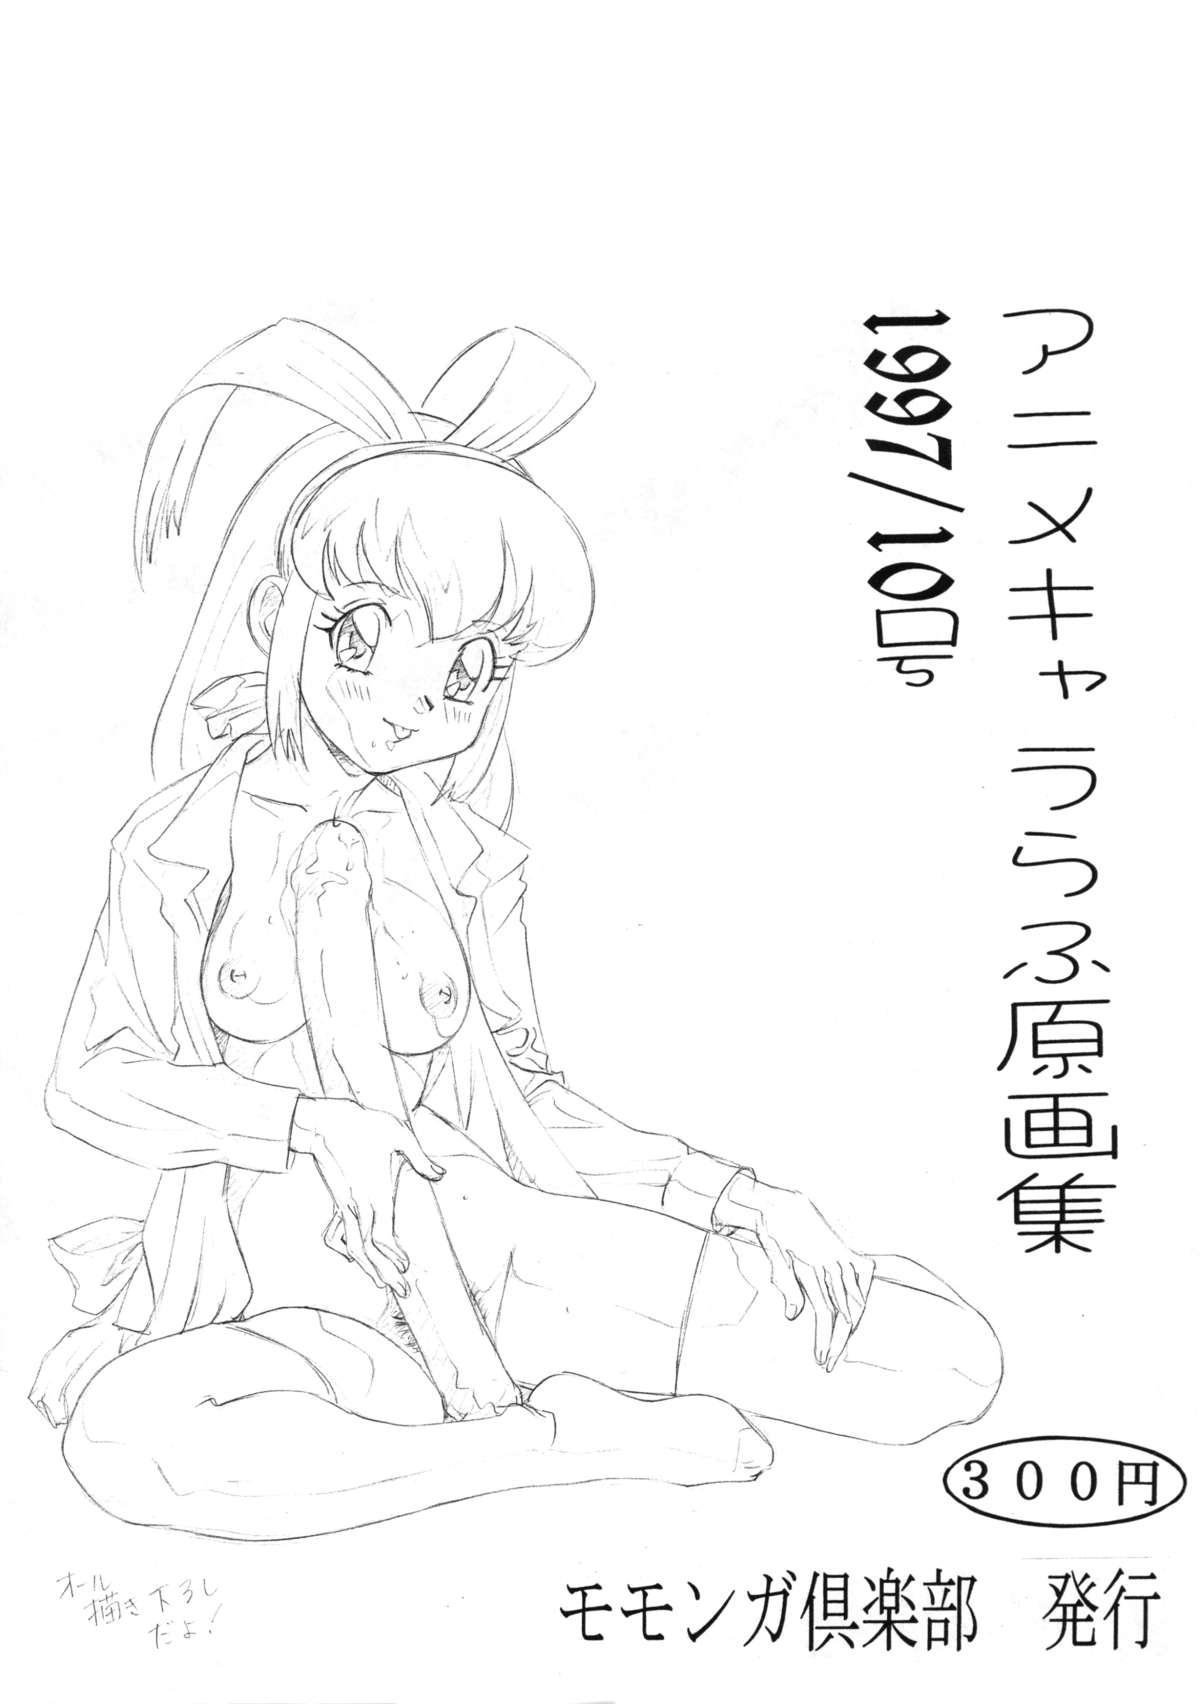 Playing Anime Kyararafu Original Collection 1997/10 Issue - Urusei yatsura Nude - Picture 1